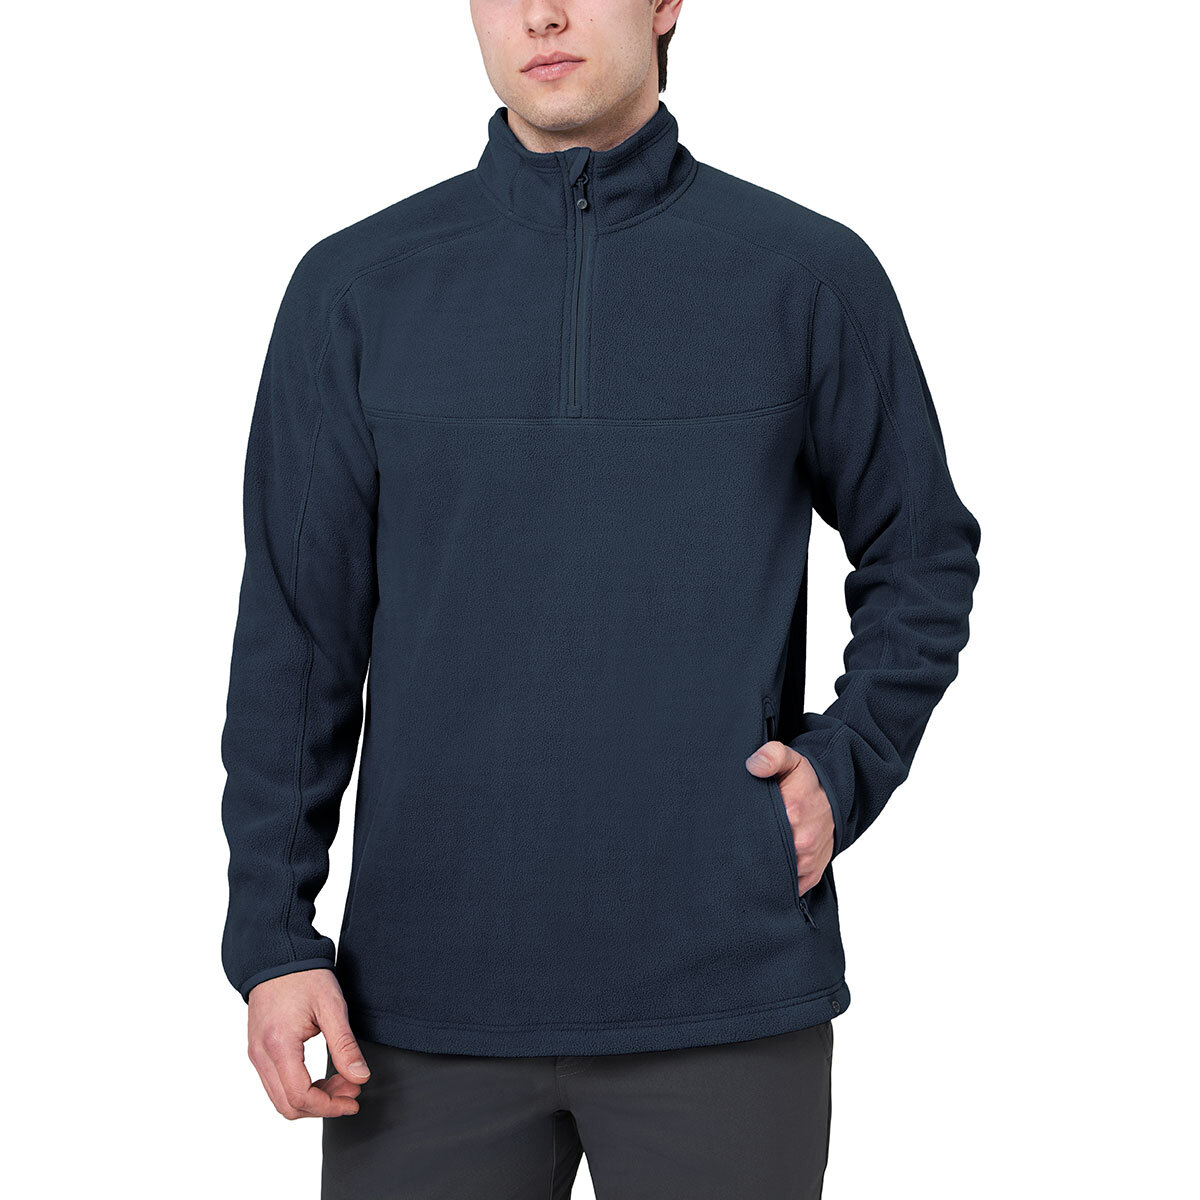 Mondetta Mens Quarter Zip Pullover in Navy, Extra Large